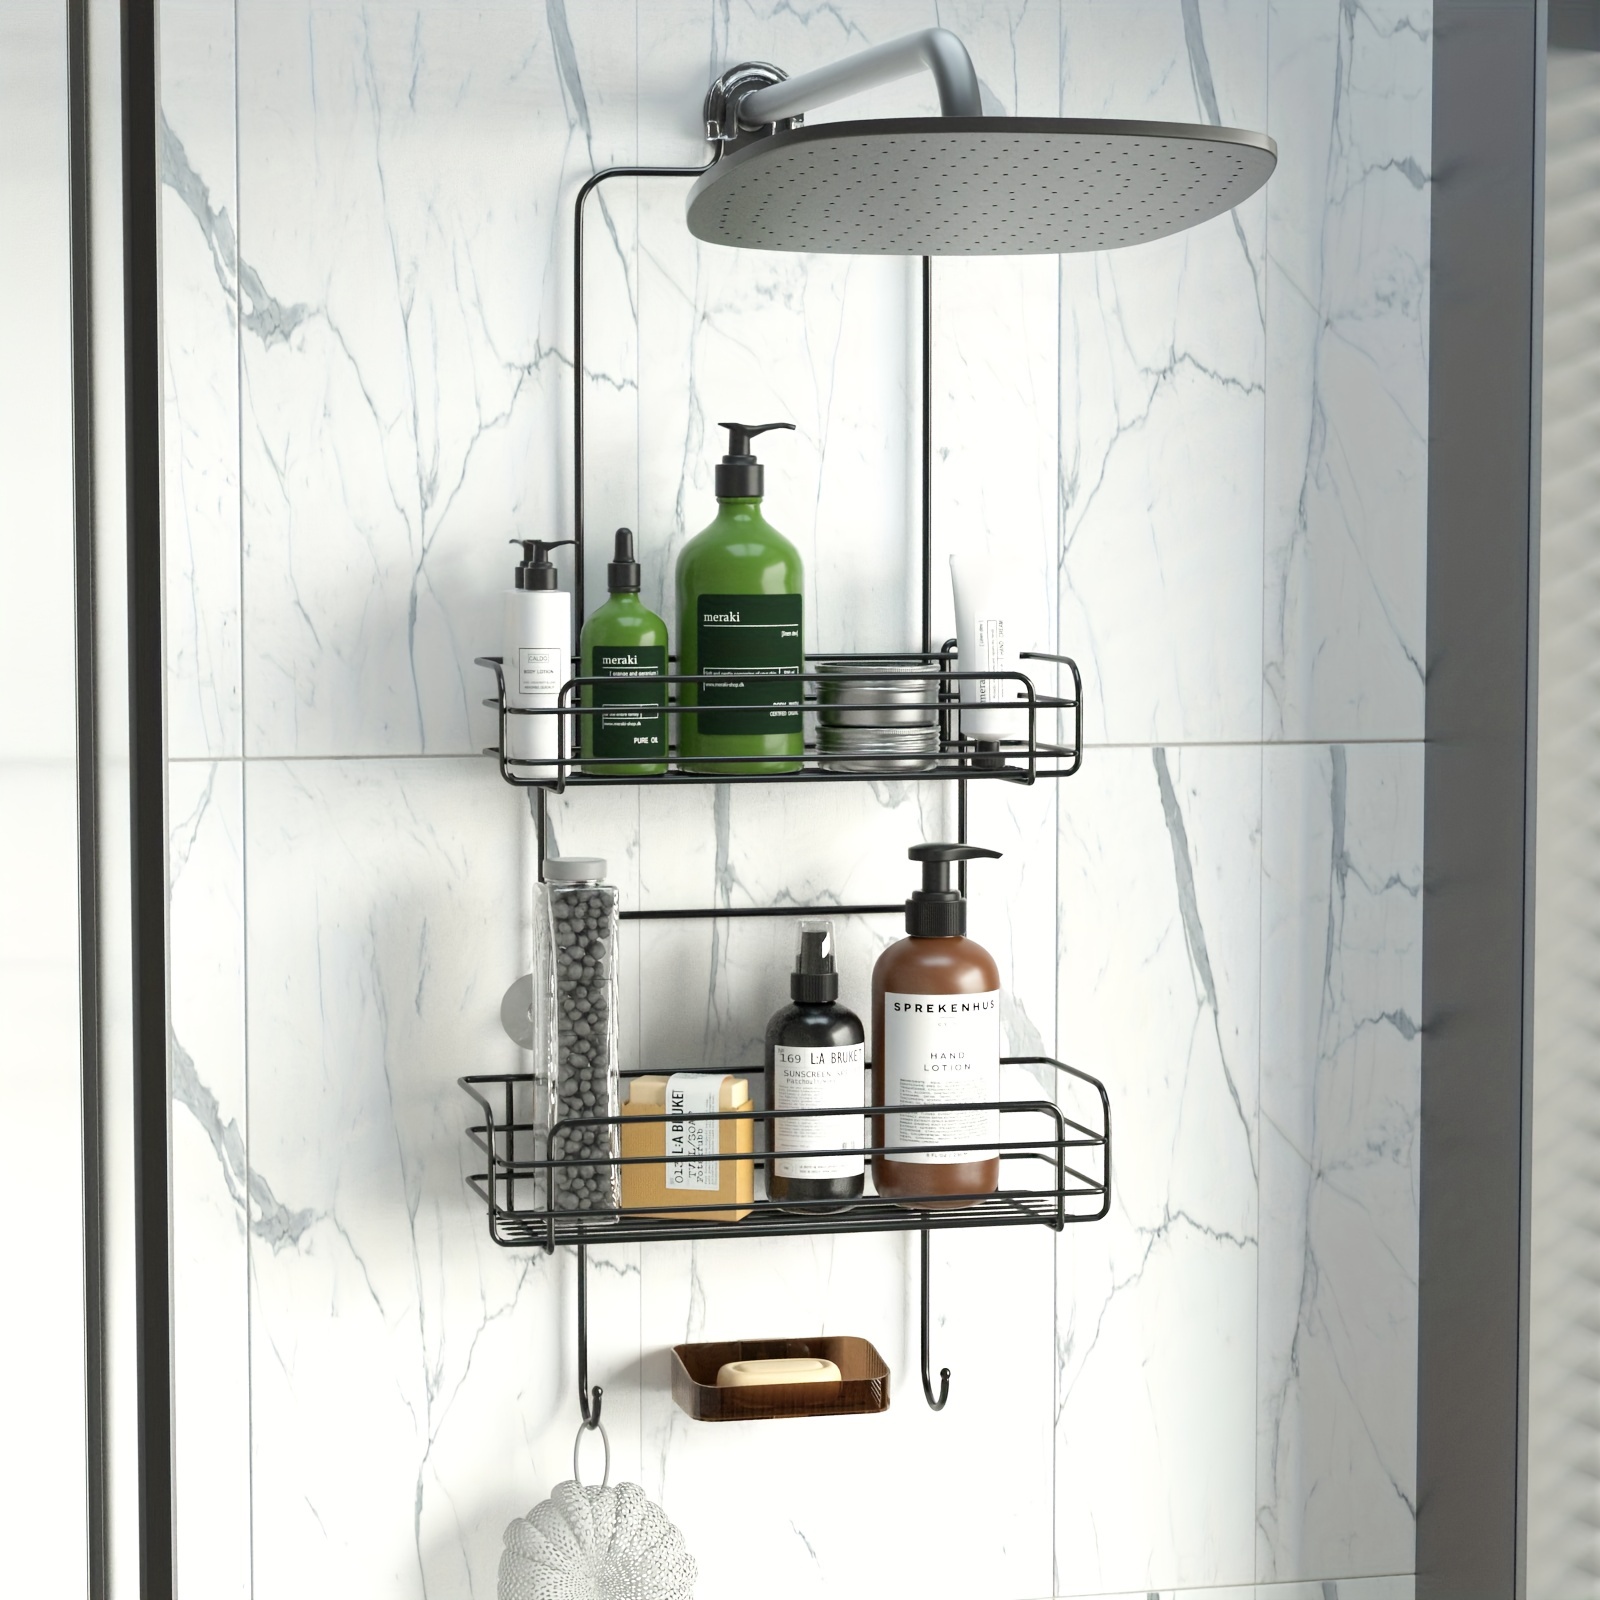 Hanging Shower Caddy, Bathroom Shelves Over Shower Head, Bathroom